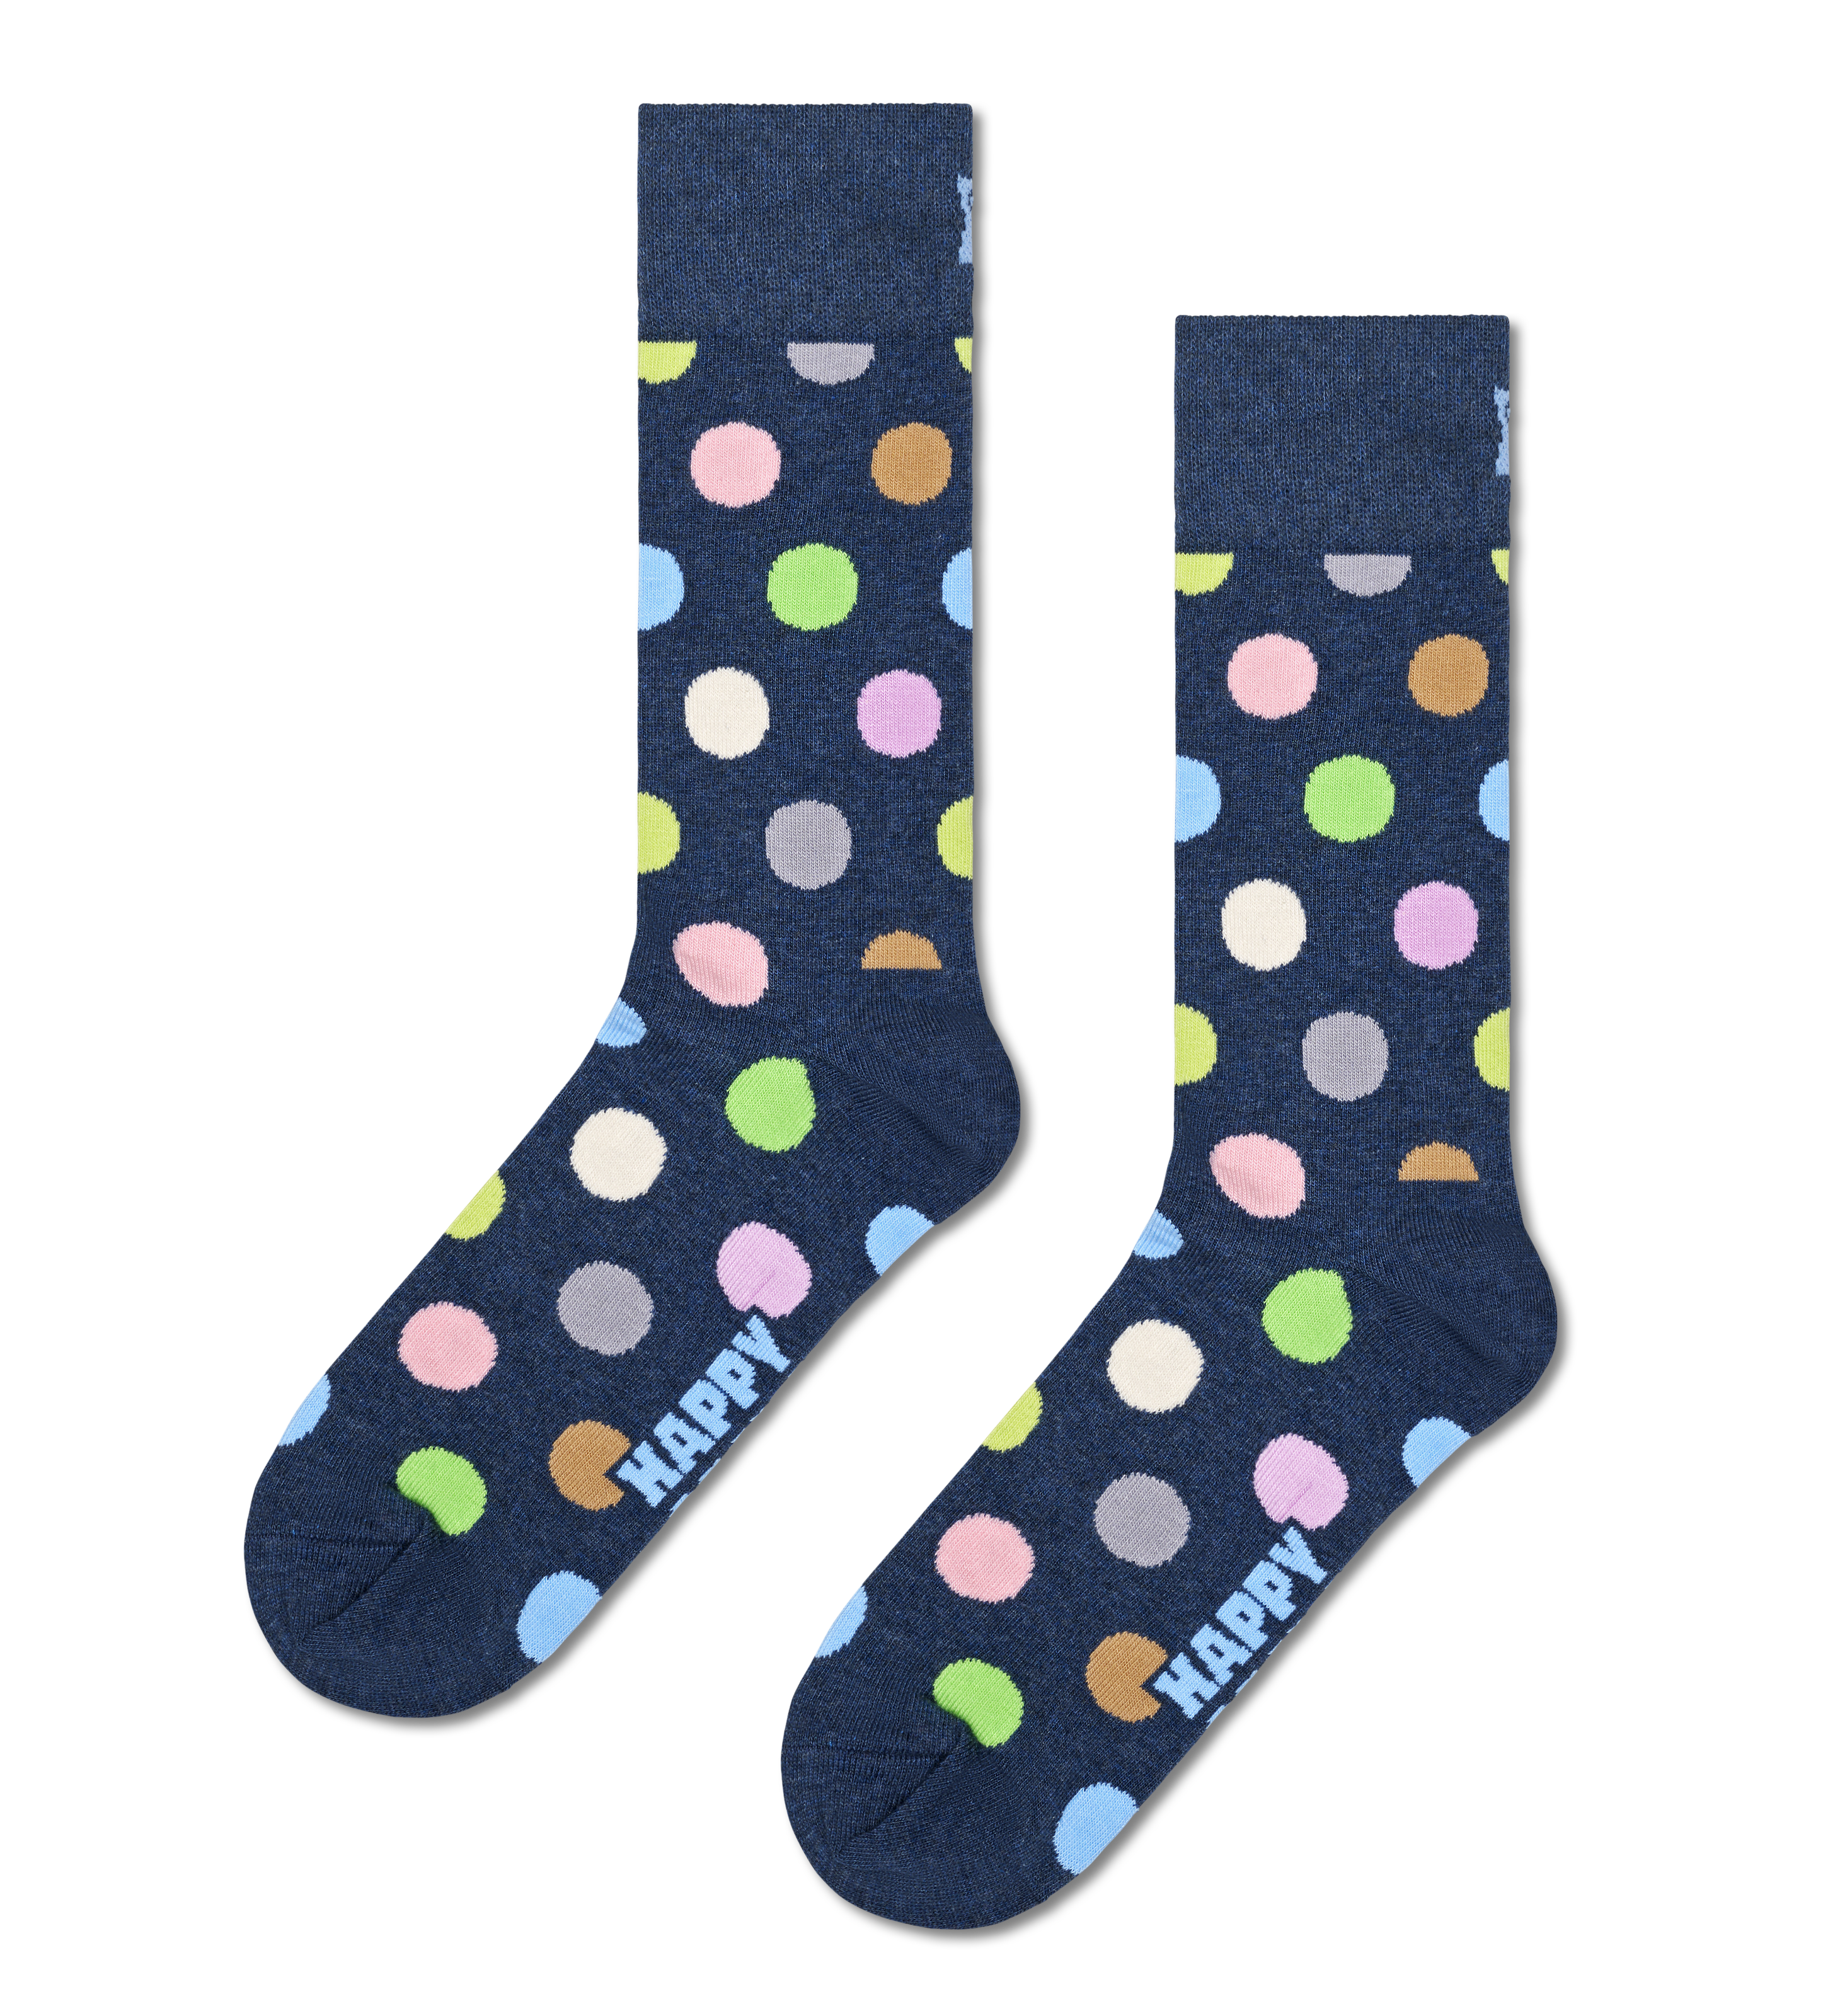 Happy Socks Reviews 2024 - Read Before You Buy